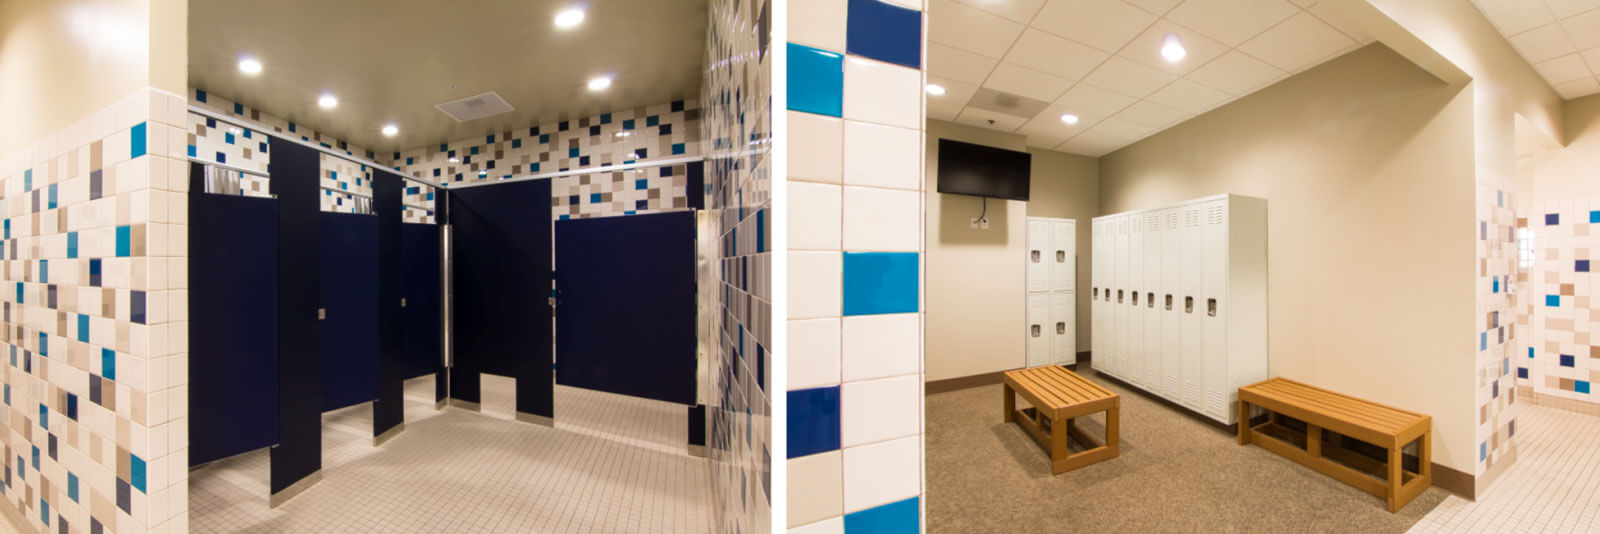 Northwest Valley Family YMCA bathroom and locker room, El Mirage, AZ